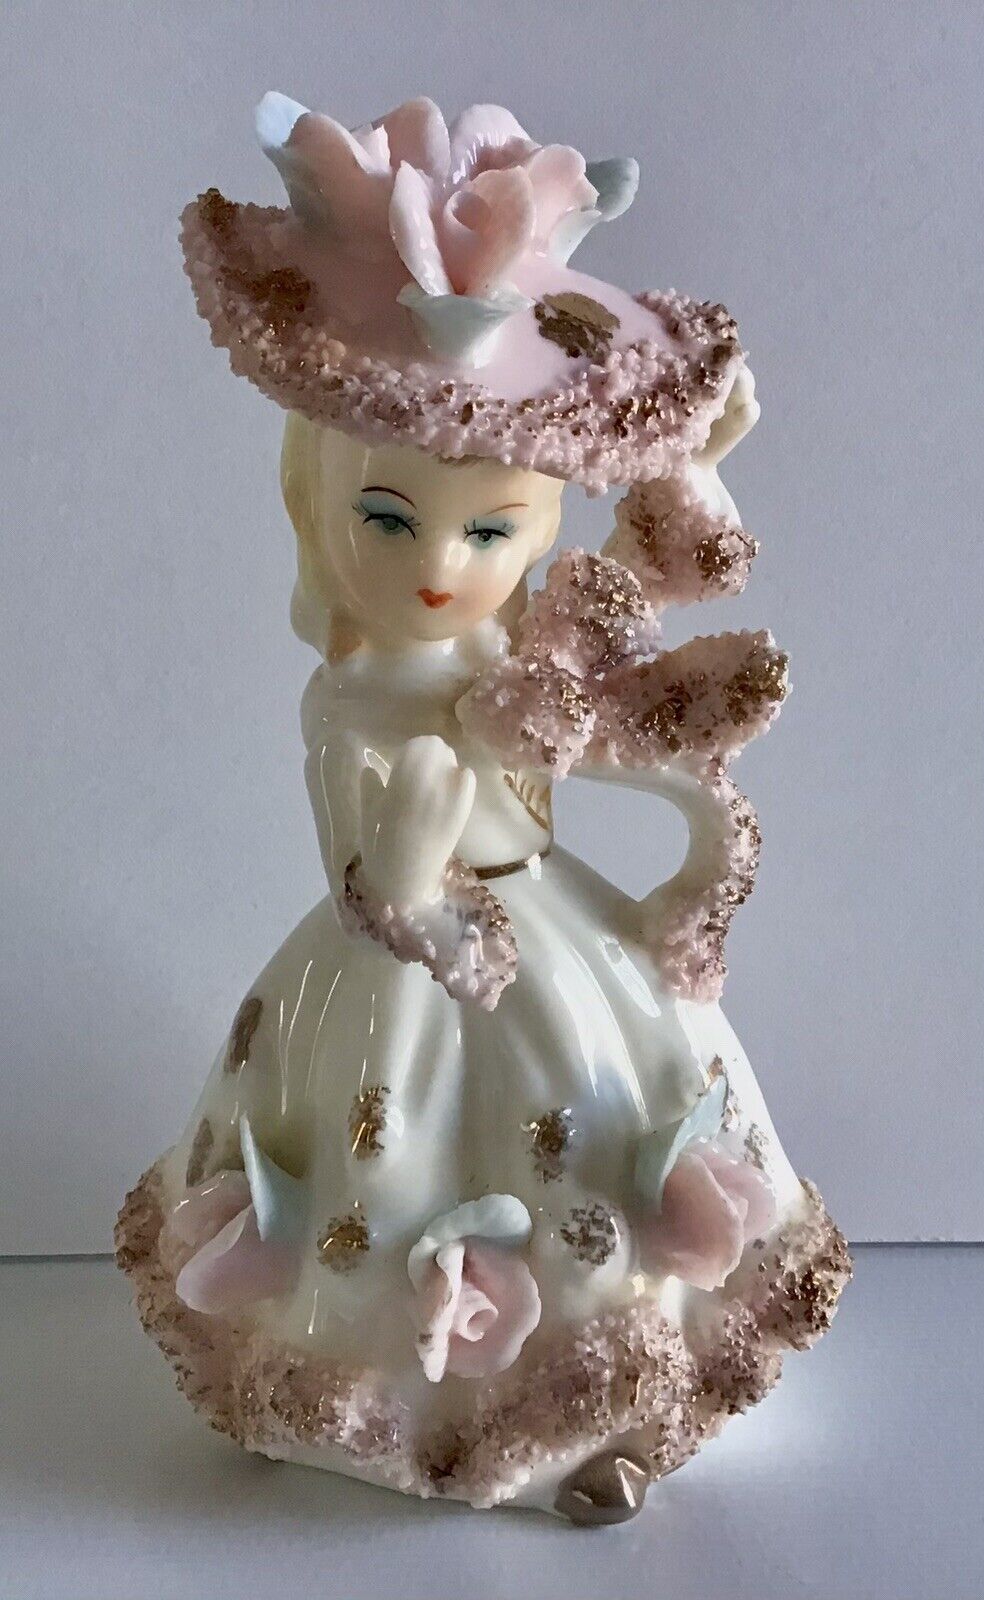 VINTAGE Betson’s Figurine Southern Belle Pink Floral Dress Japan Gold Accents